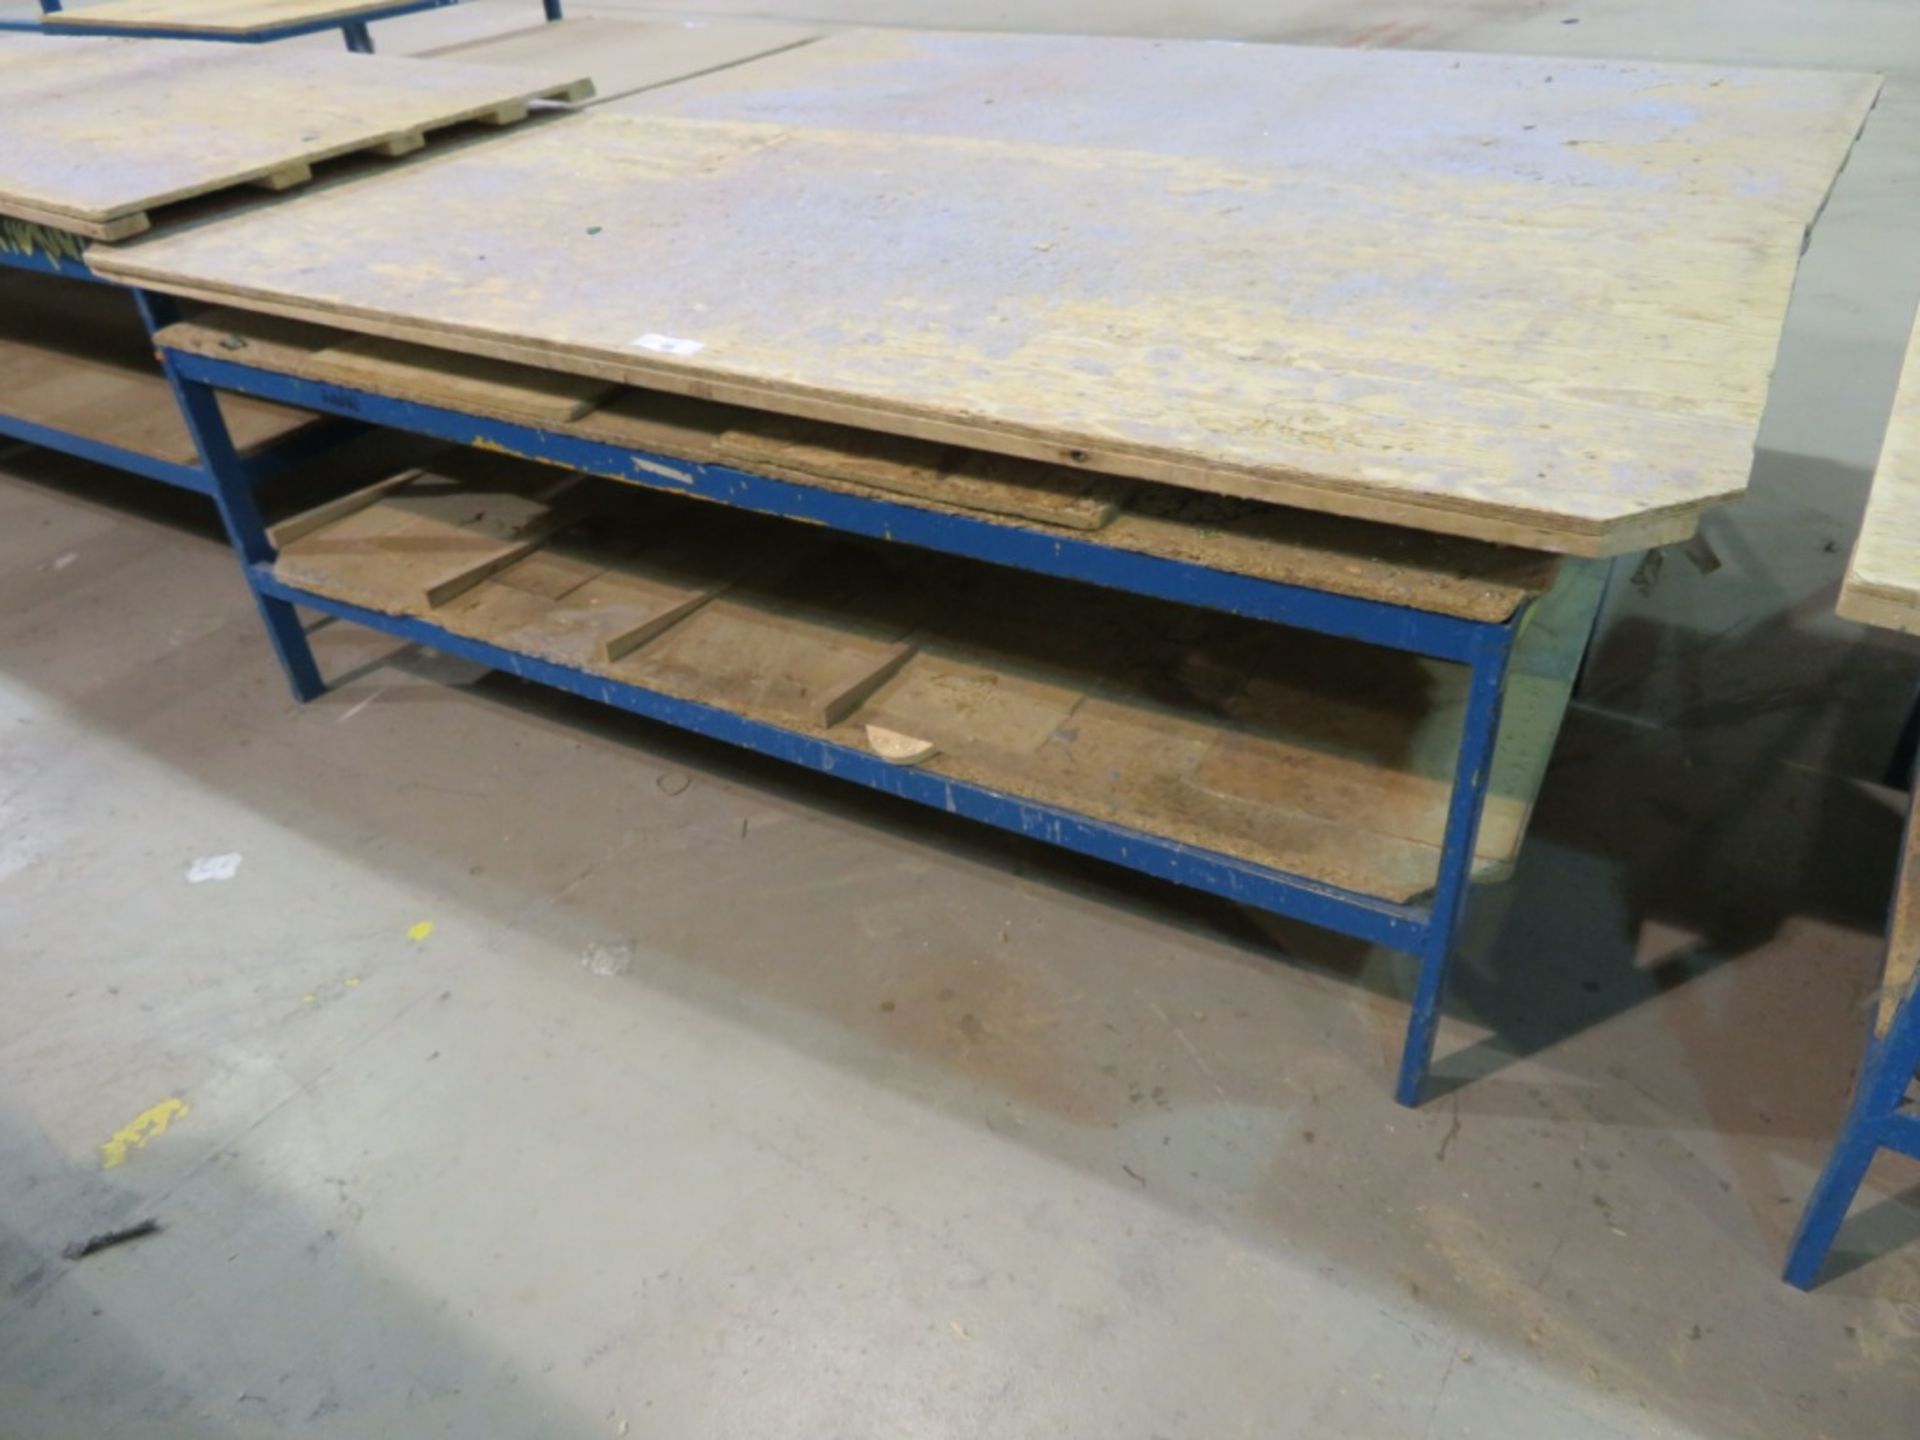 Metal frame wooden top swivel work bench - 2300 x 1000 x 780mm (LxDxH)